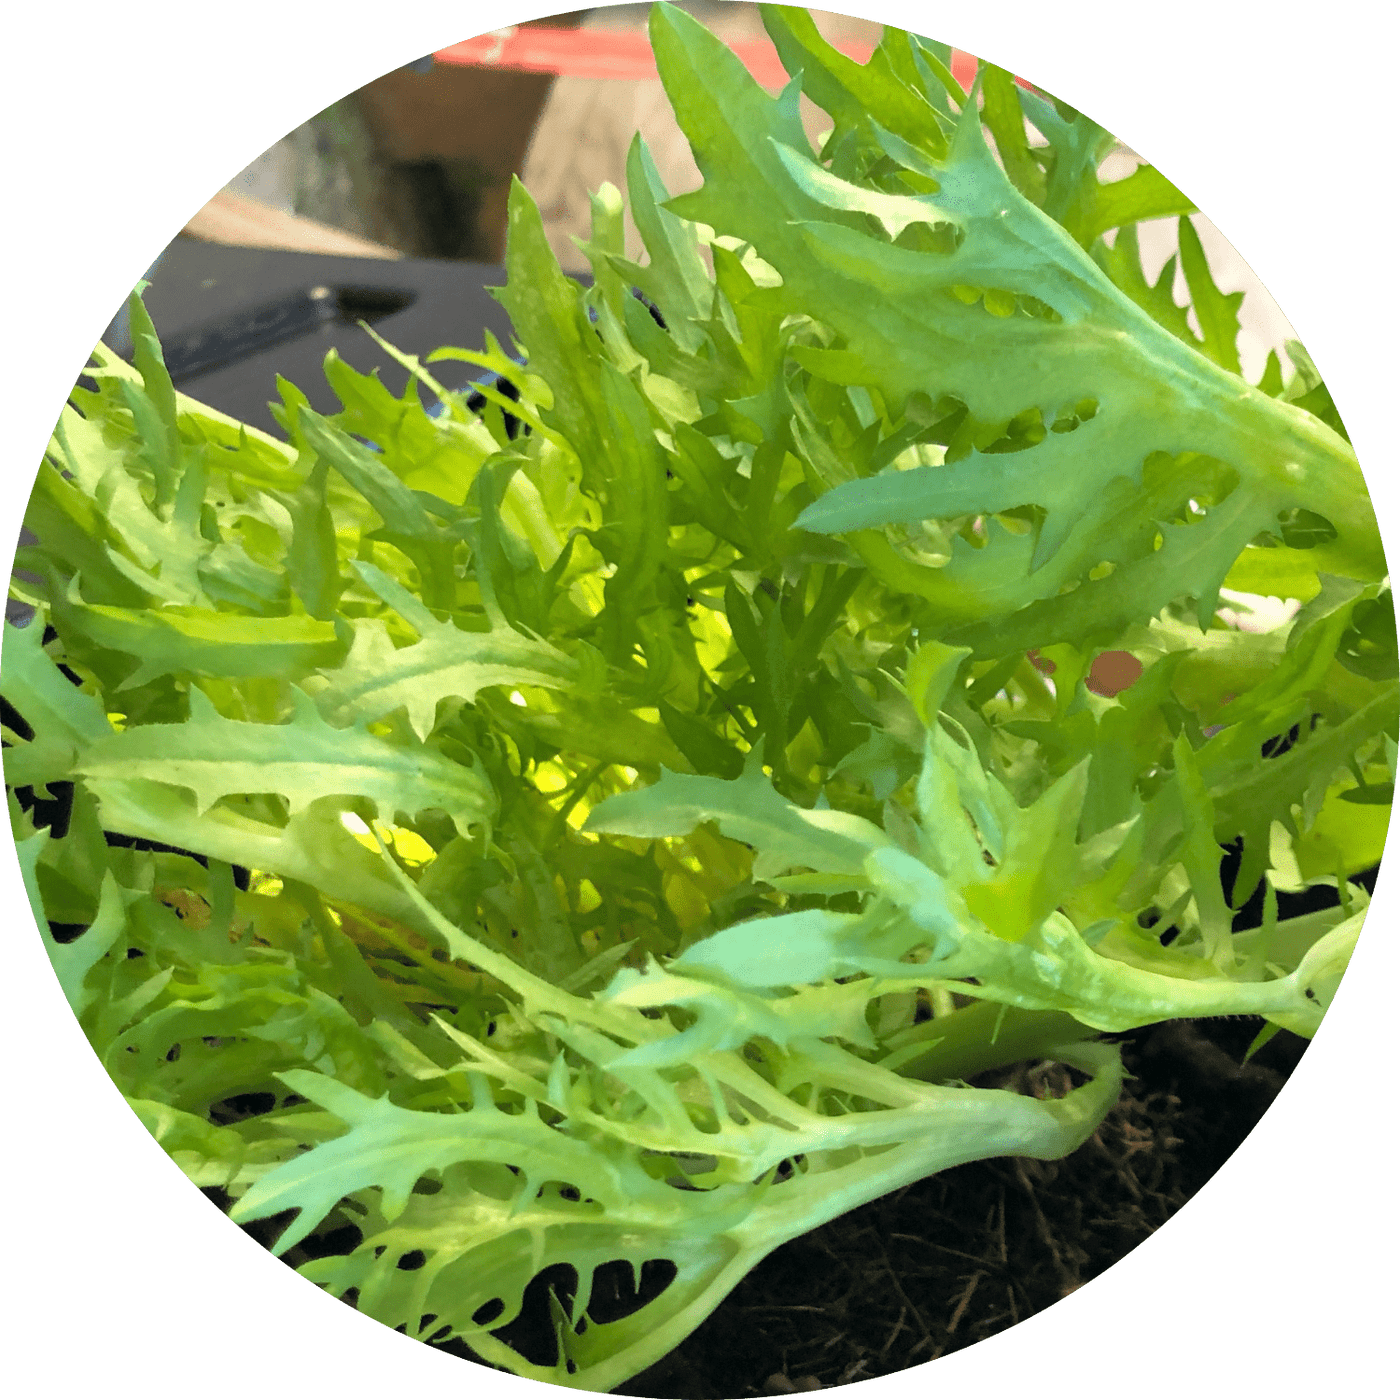 Benefine Frisee (Leafy Green)